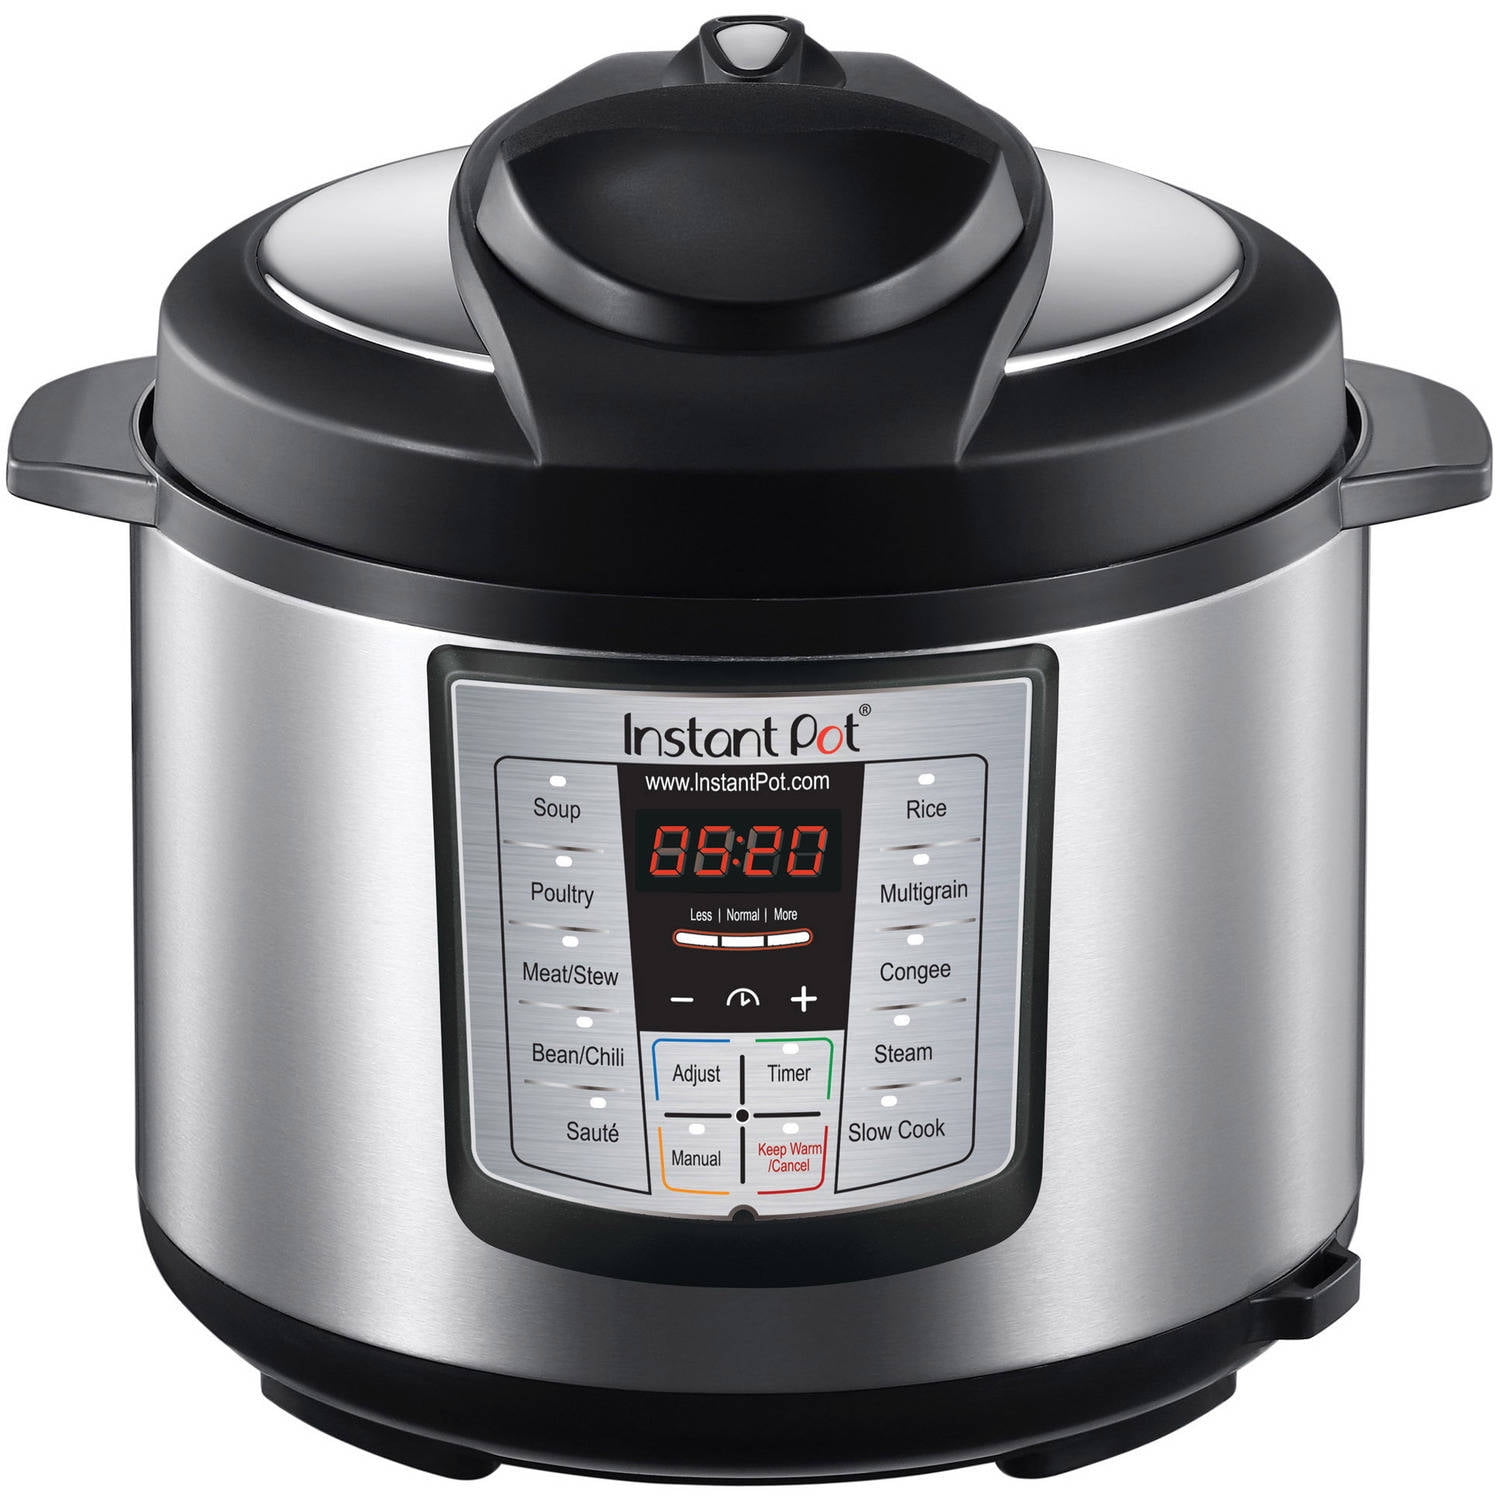 Instant Pot 7-in-1 Programmable Pressure Cooker $78.50